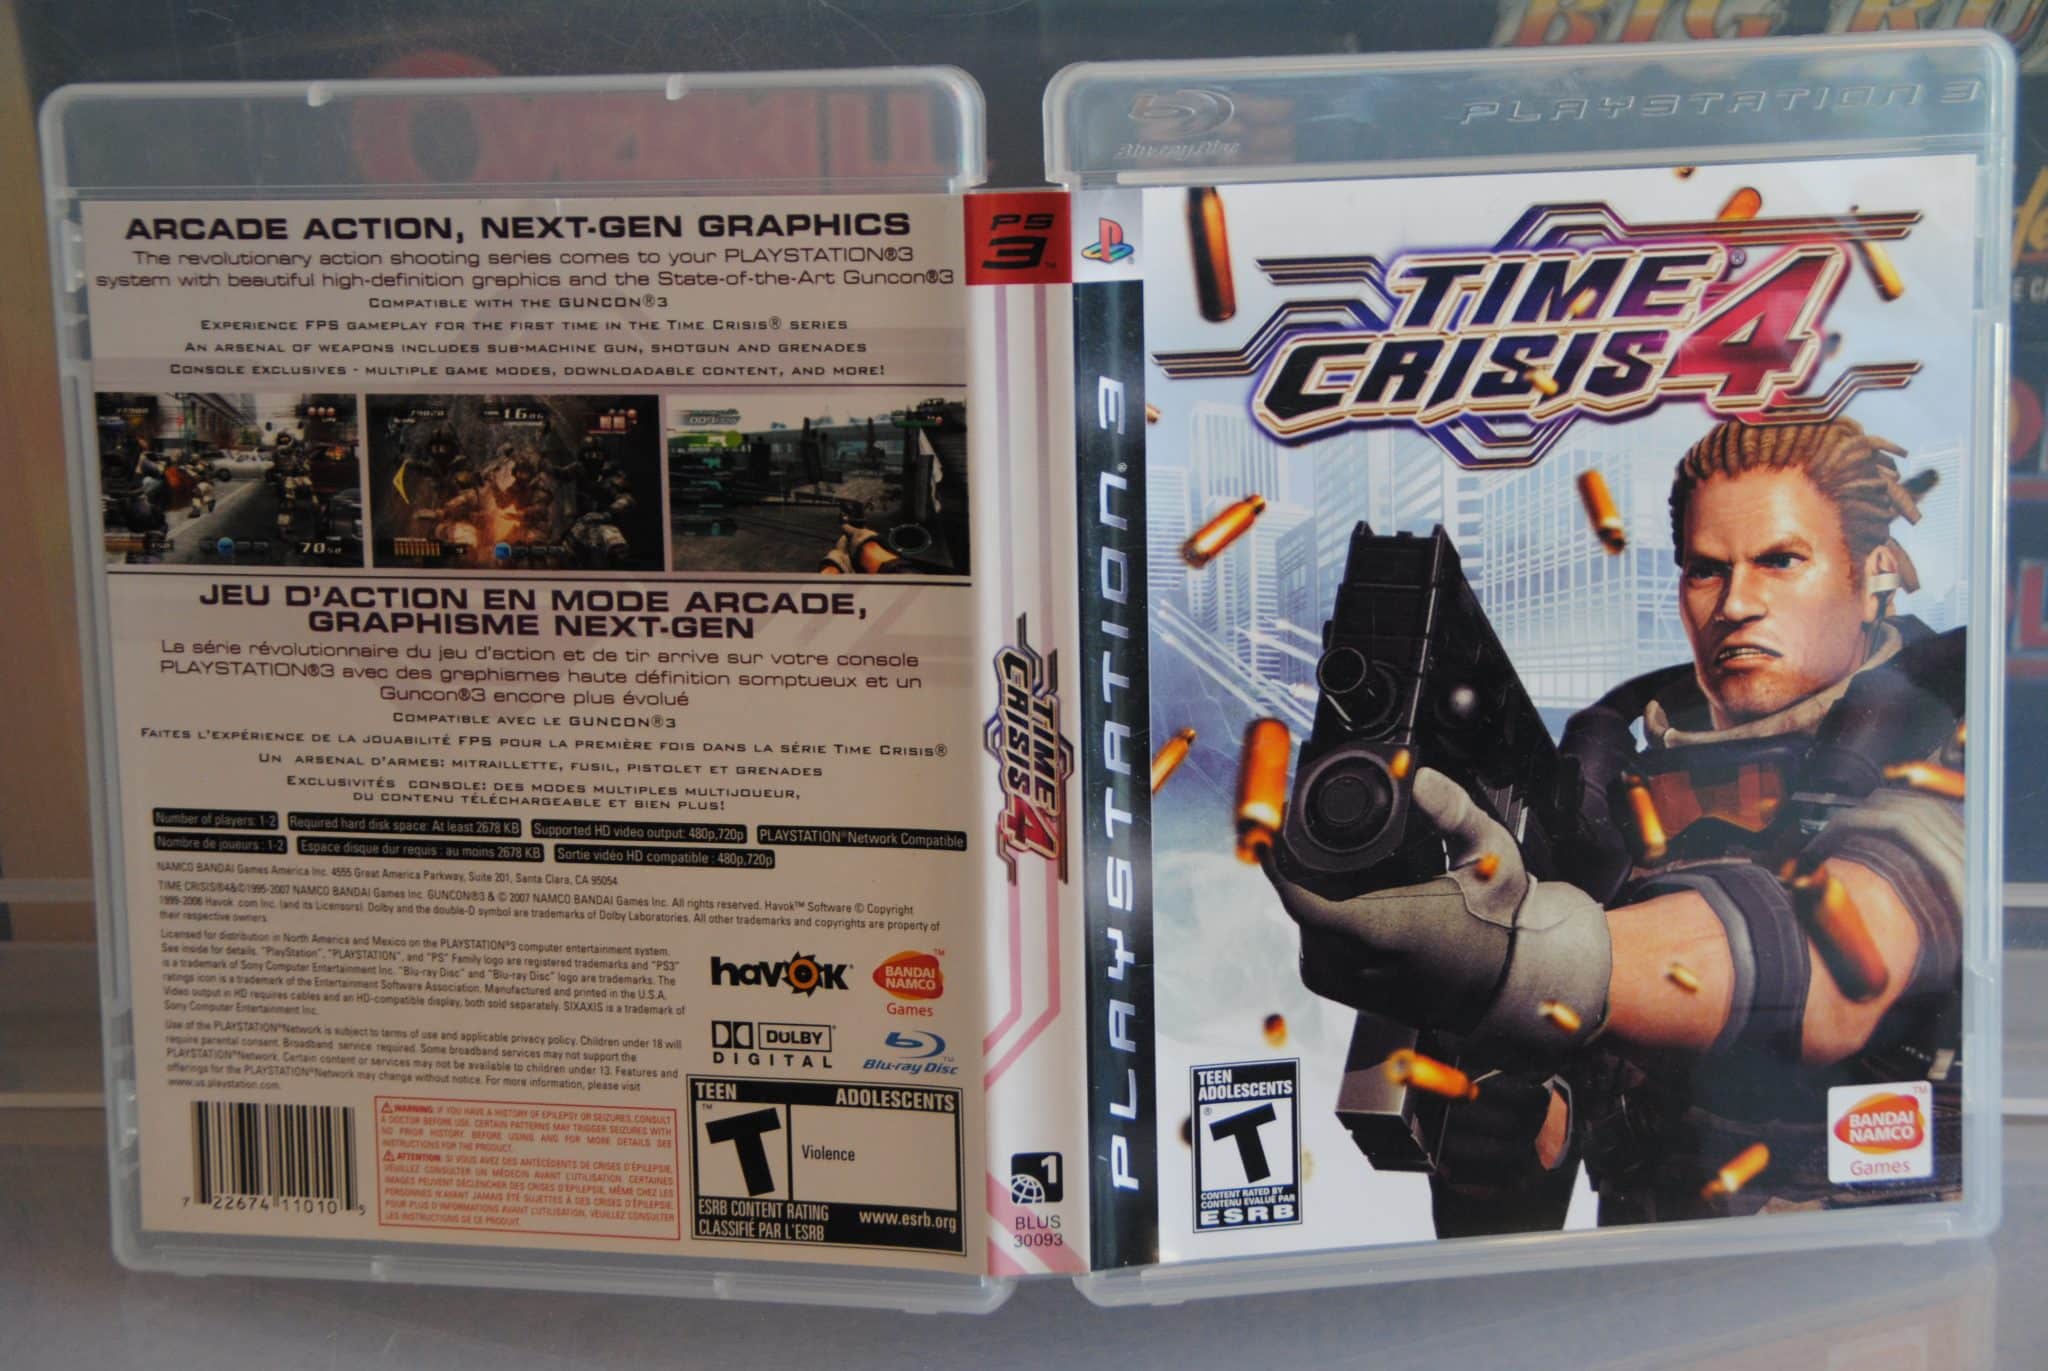 The Orange Gun Came With Cables - Time Crisis 4 PS3 • AmigaGuru's GamerBlog